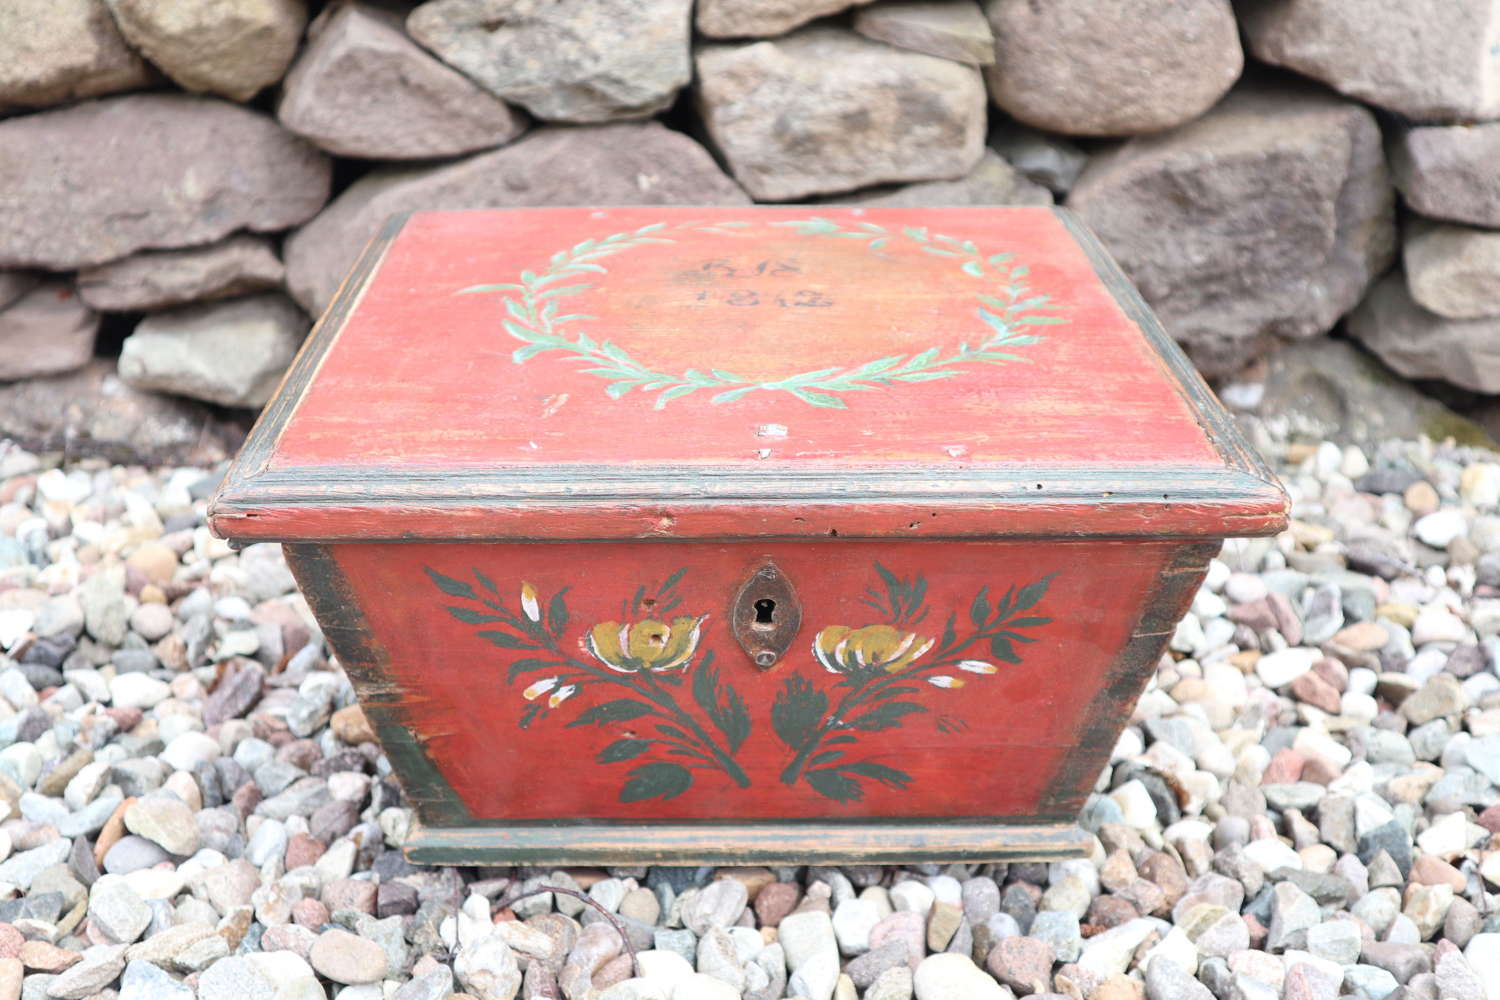 Scandinavian / Swedish Folk Art painted box Jämtland region 1812.